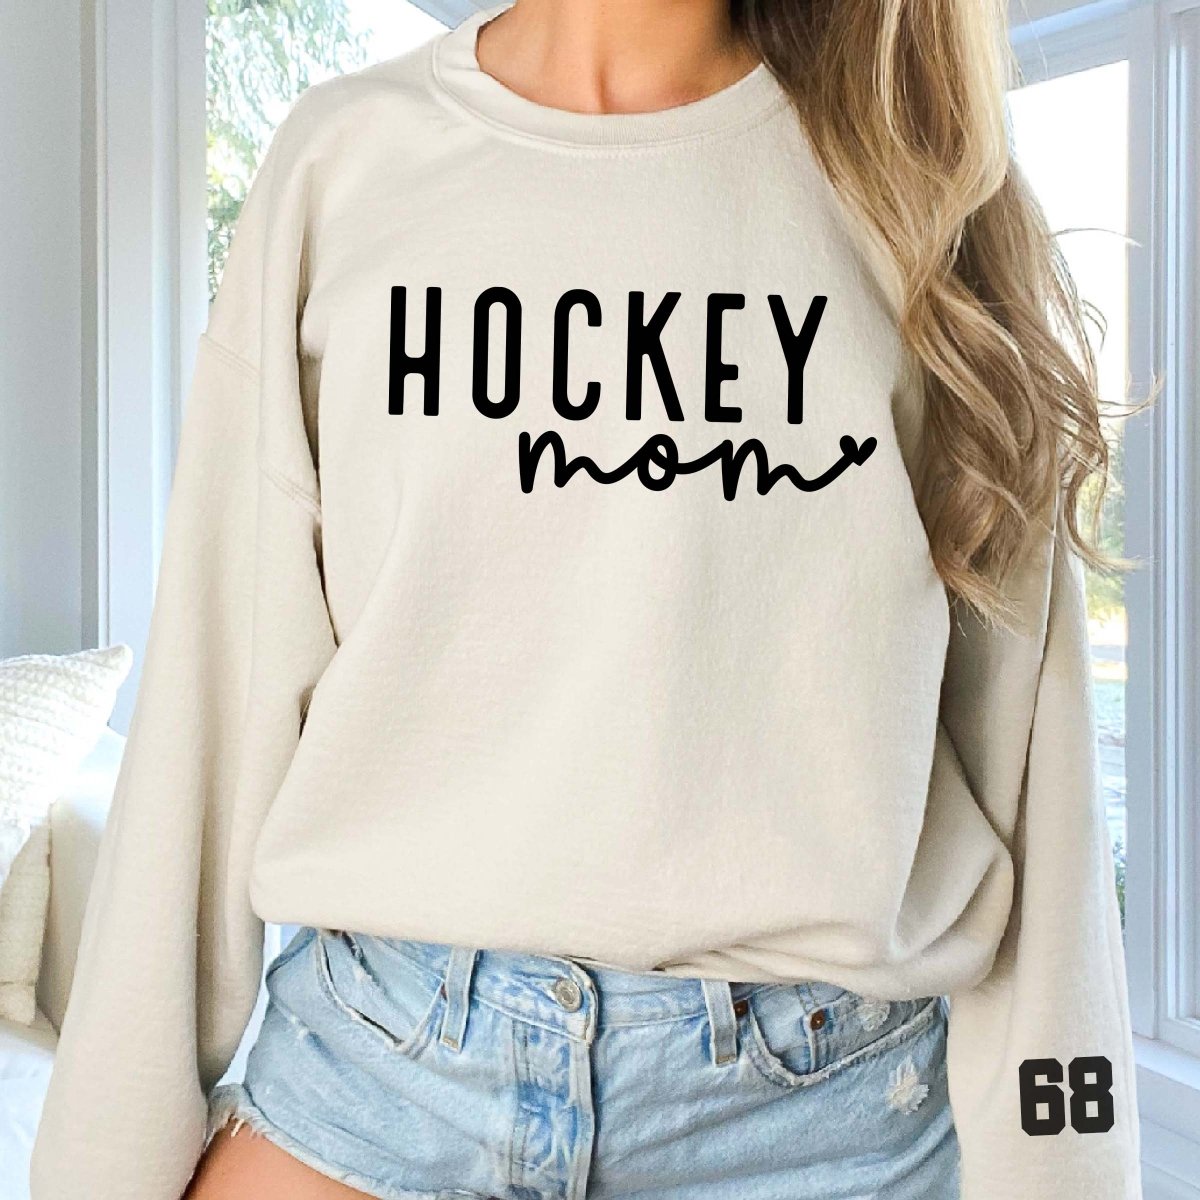 Custom Mom Sports Crew Sweatshirt - Limeberry Designs